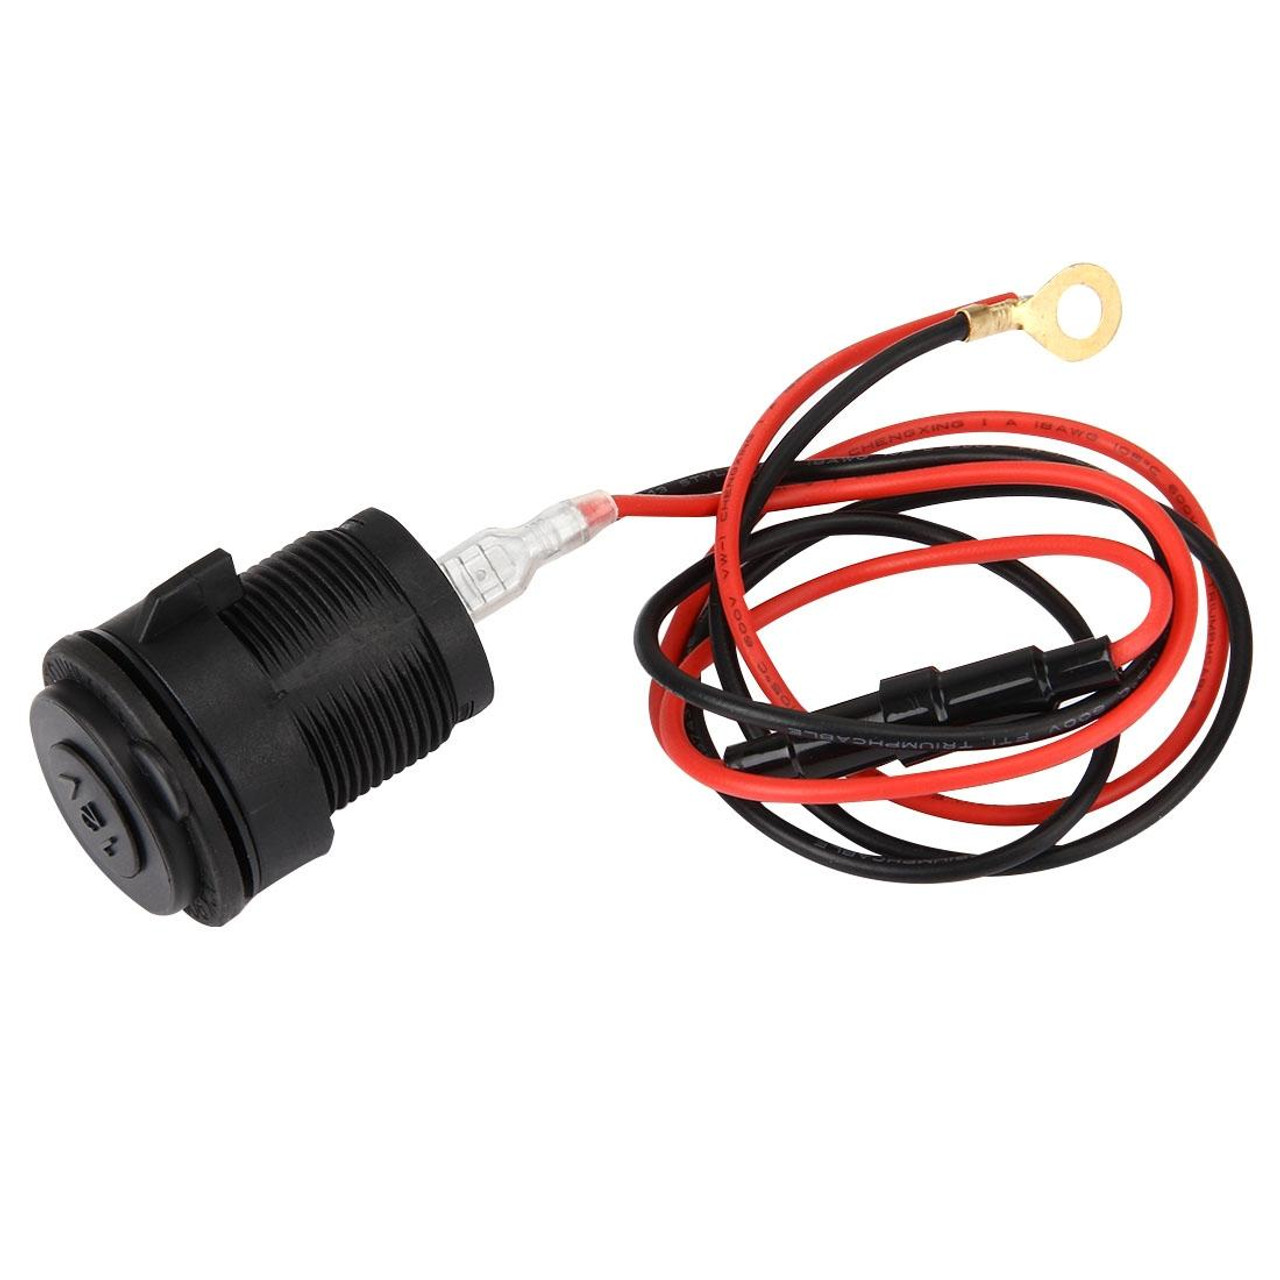 LED Display Dual USB Ports Cigarette Lighter Socket Car Charger Adapter GPS  Dash Cam Power Outlet 12-24V 3.1A Gold Tone 